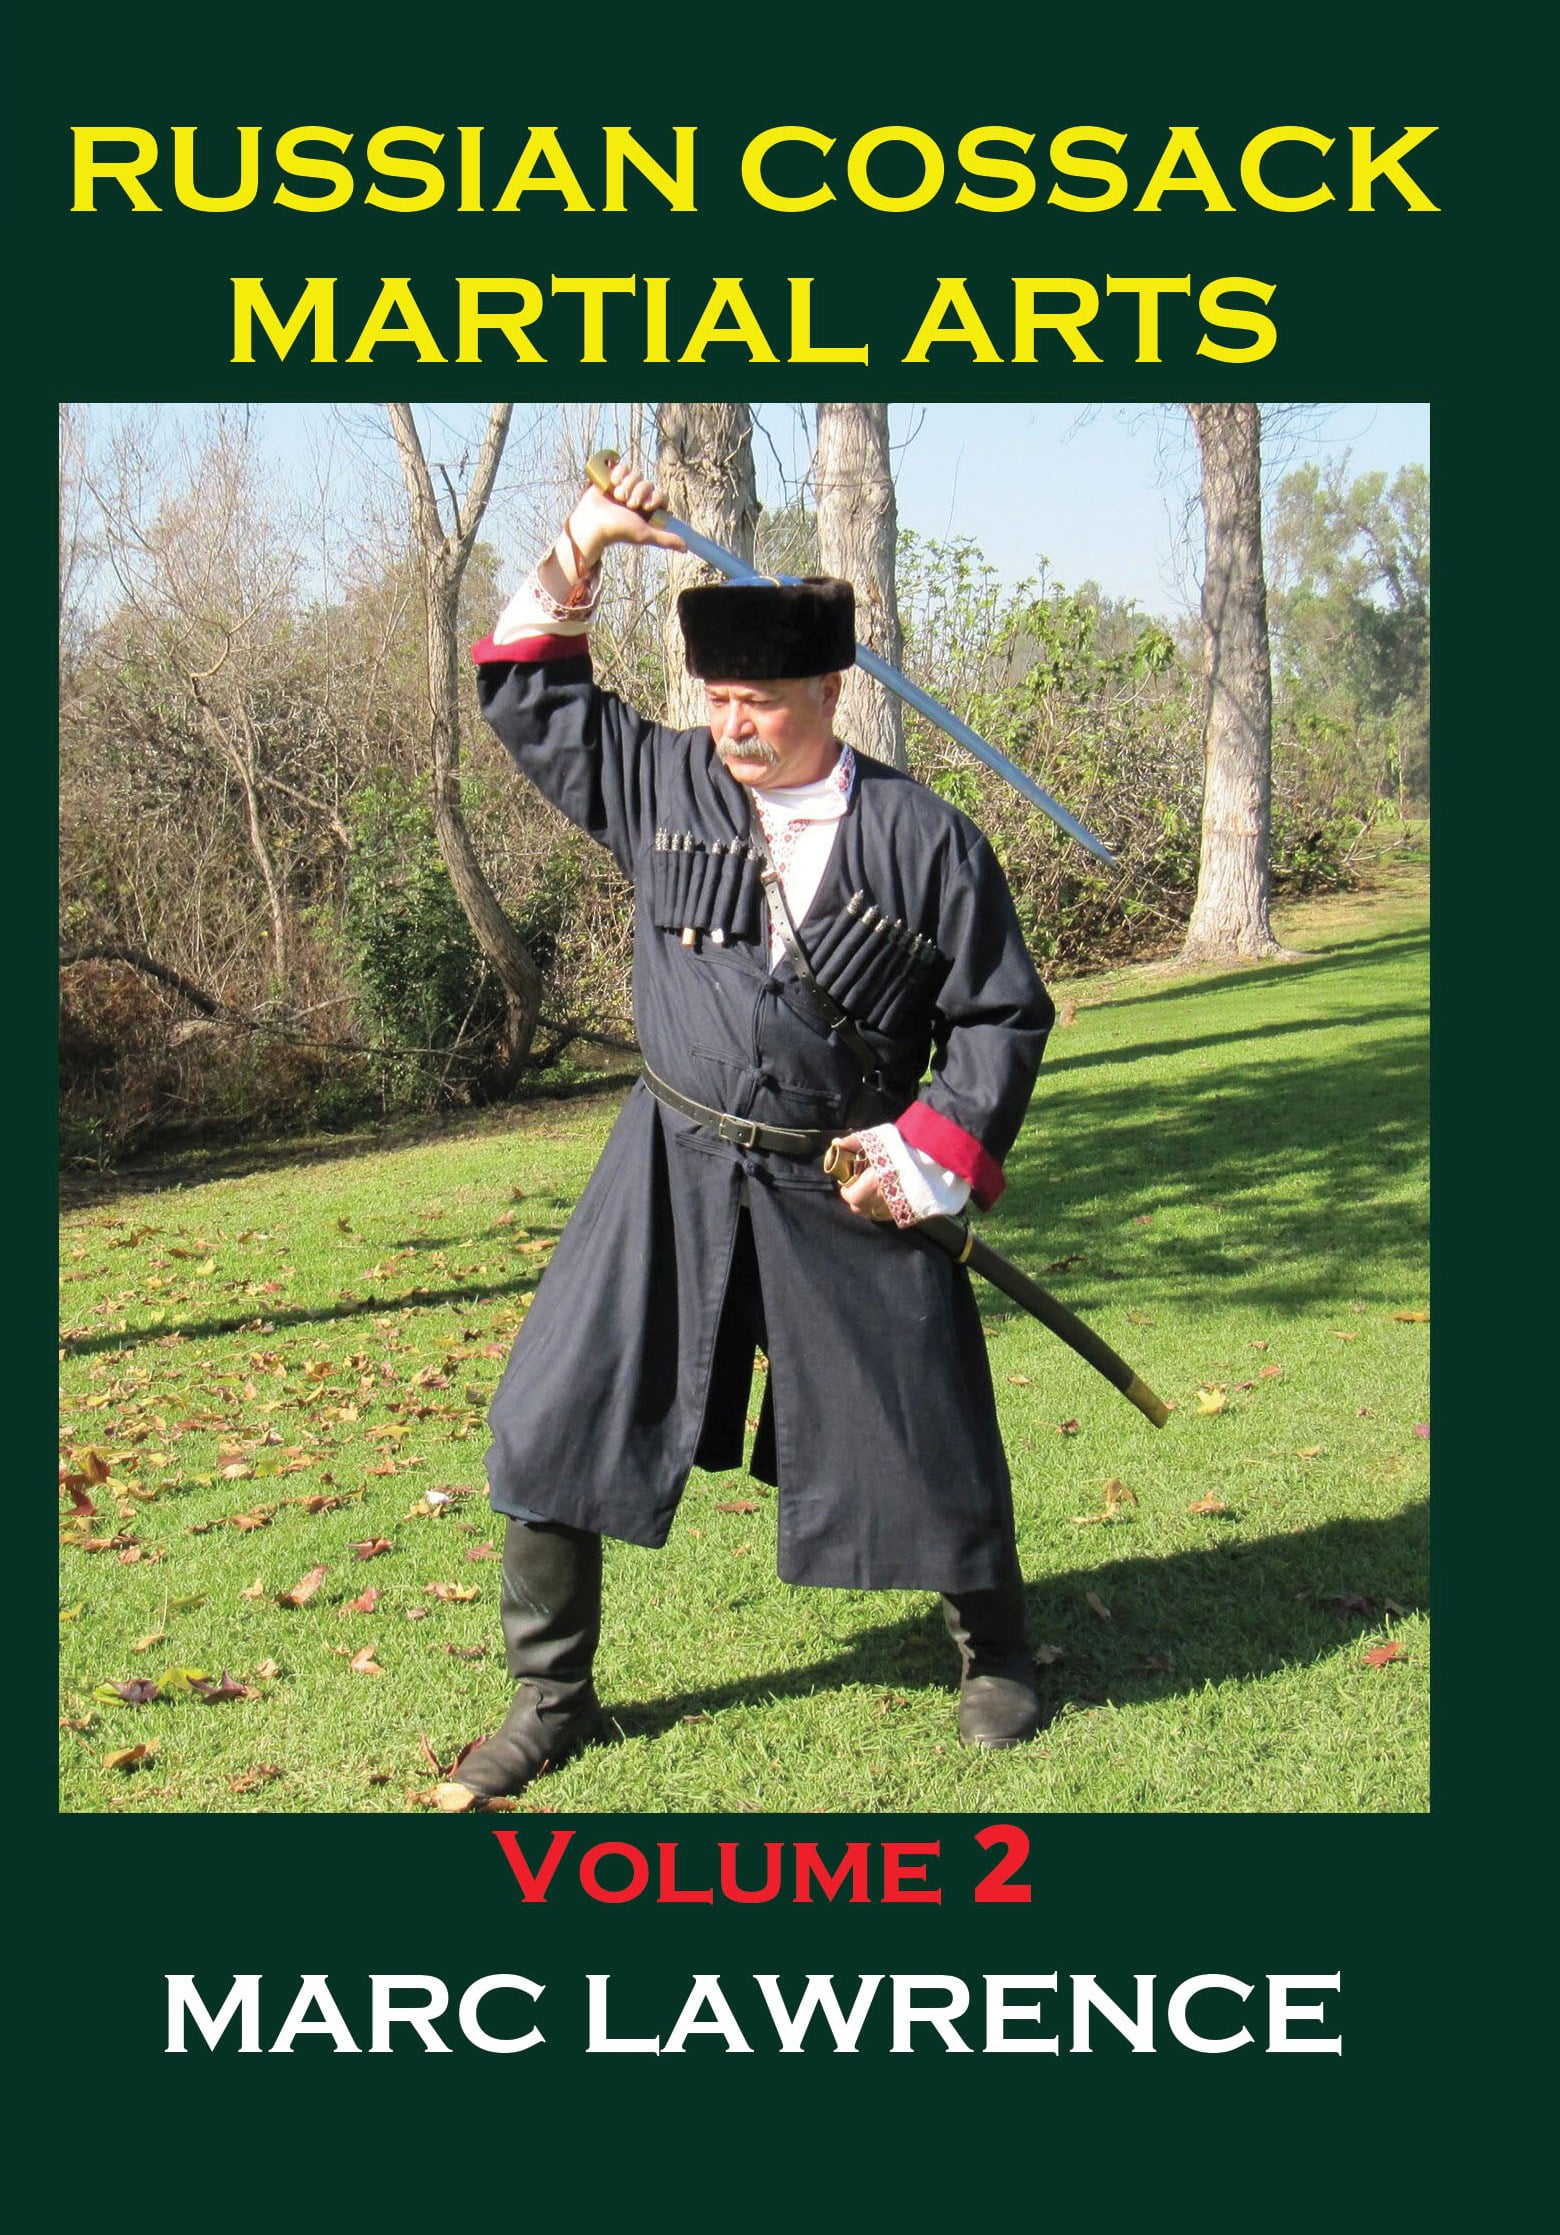 Russian Cossack Martial Arts Training #2 DVD